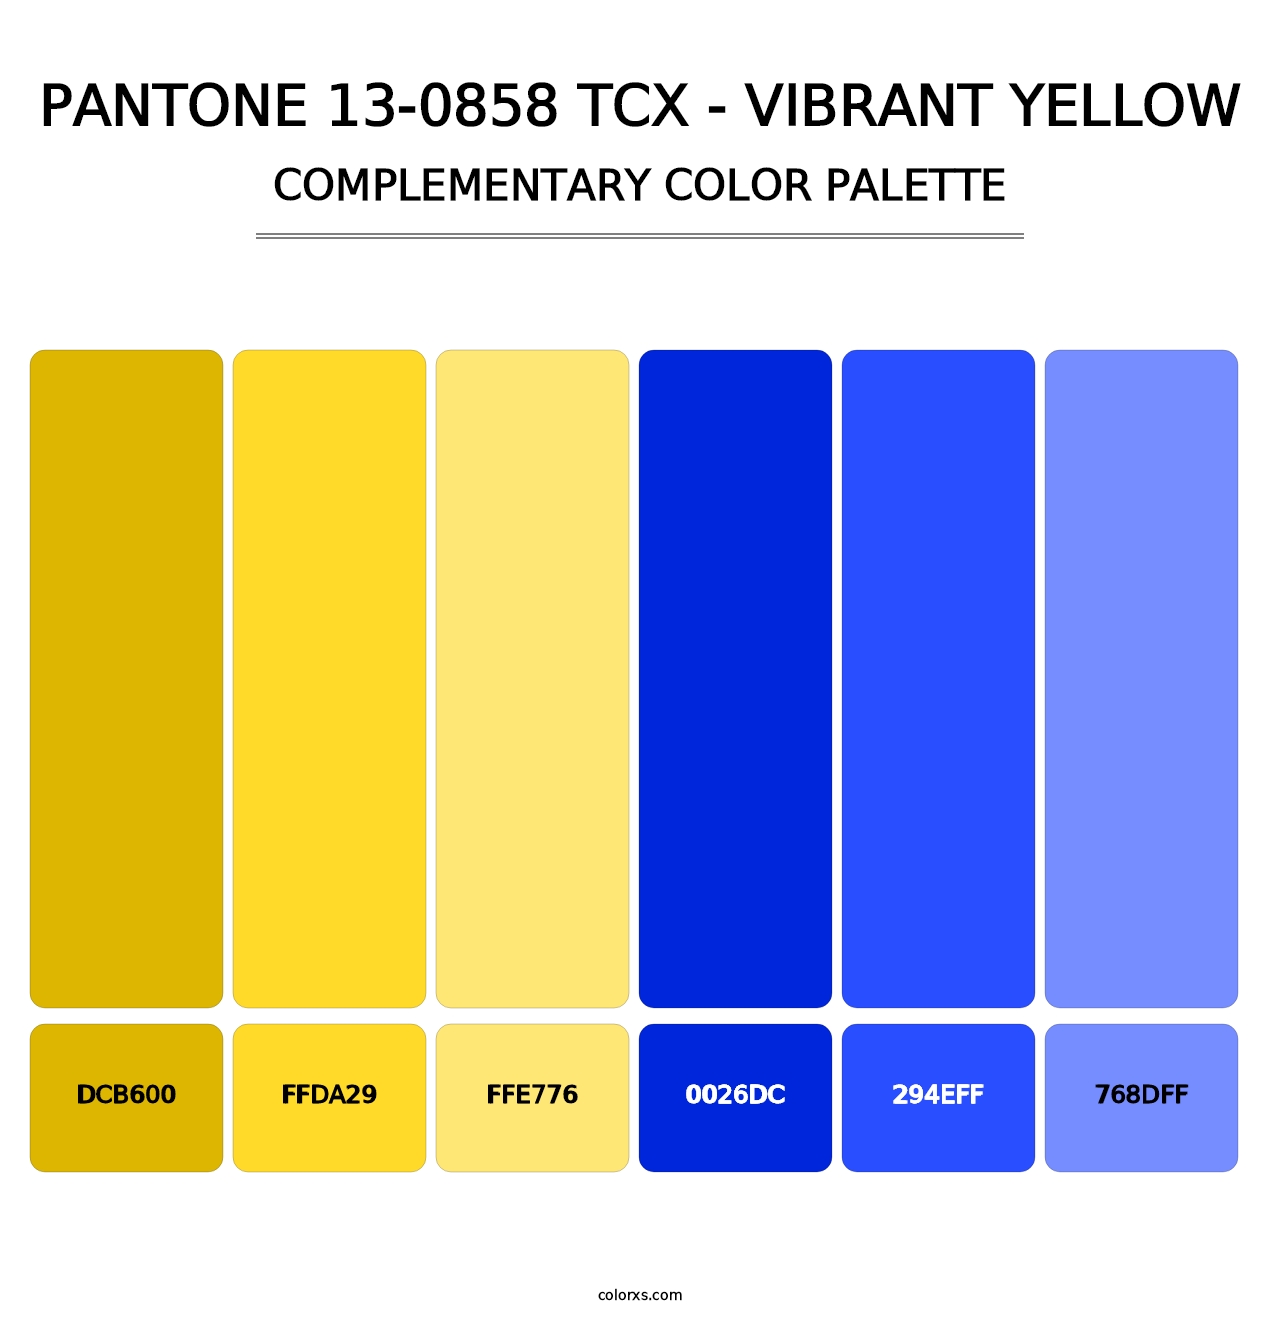 PANTONE 13-0858 TCX - Vibrant Yellow - Complementary Color Palette